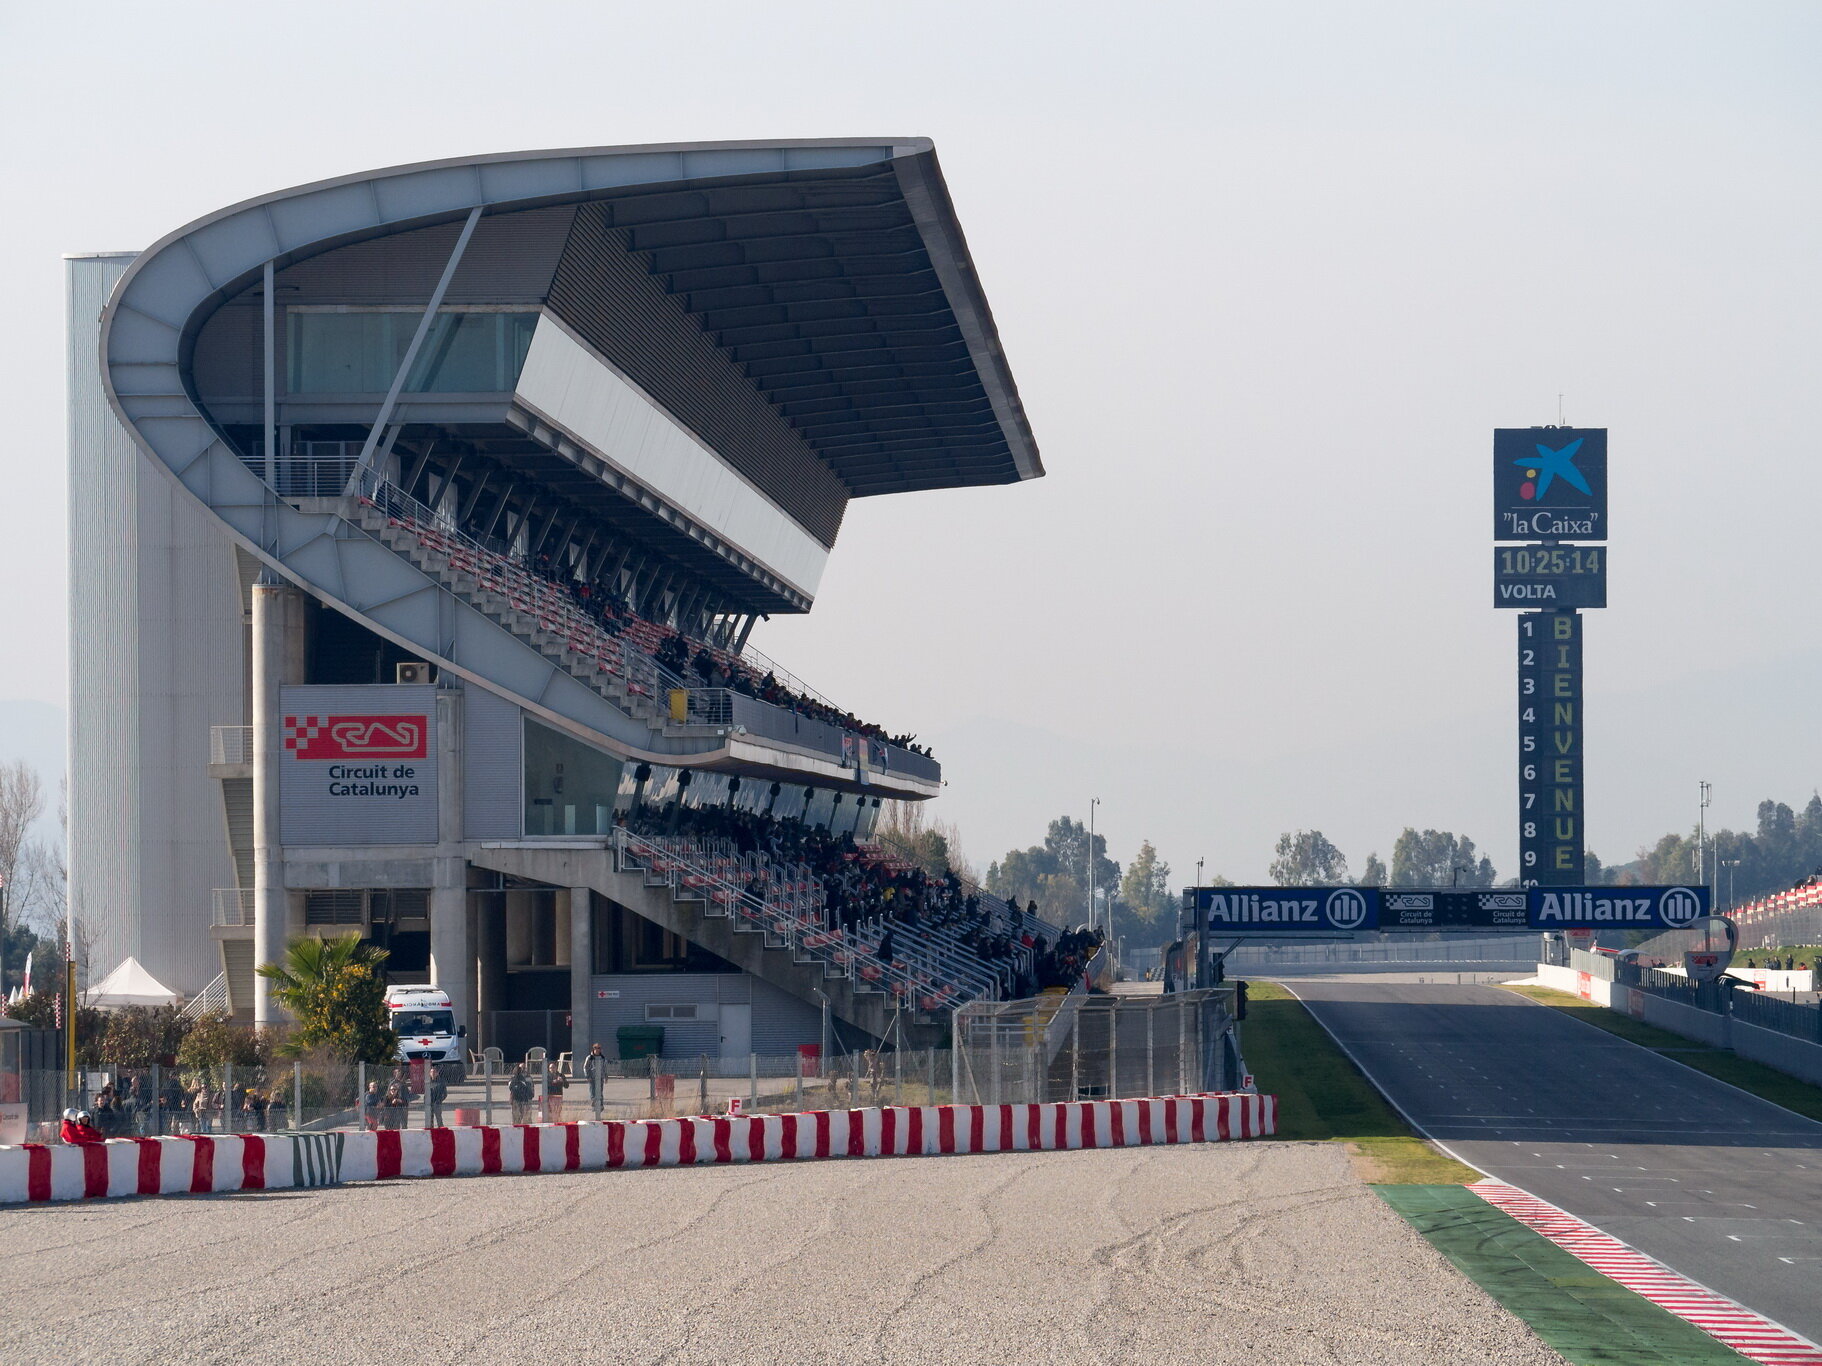 Circuit de Catalunya for GPO